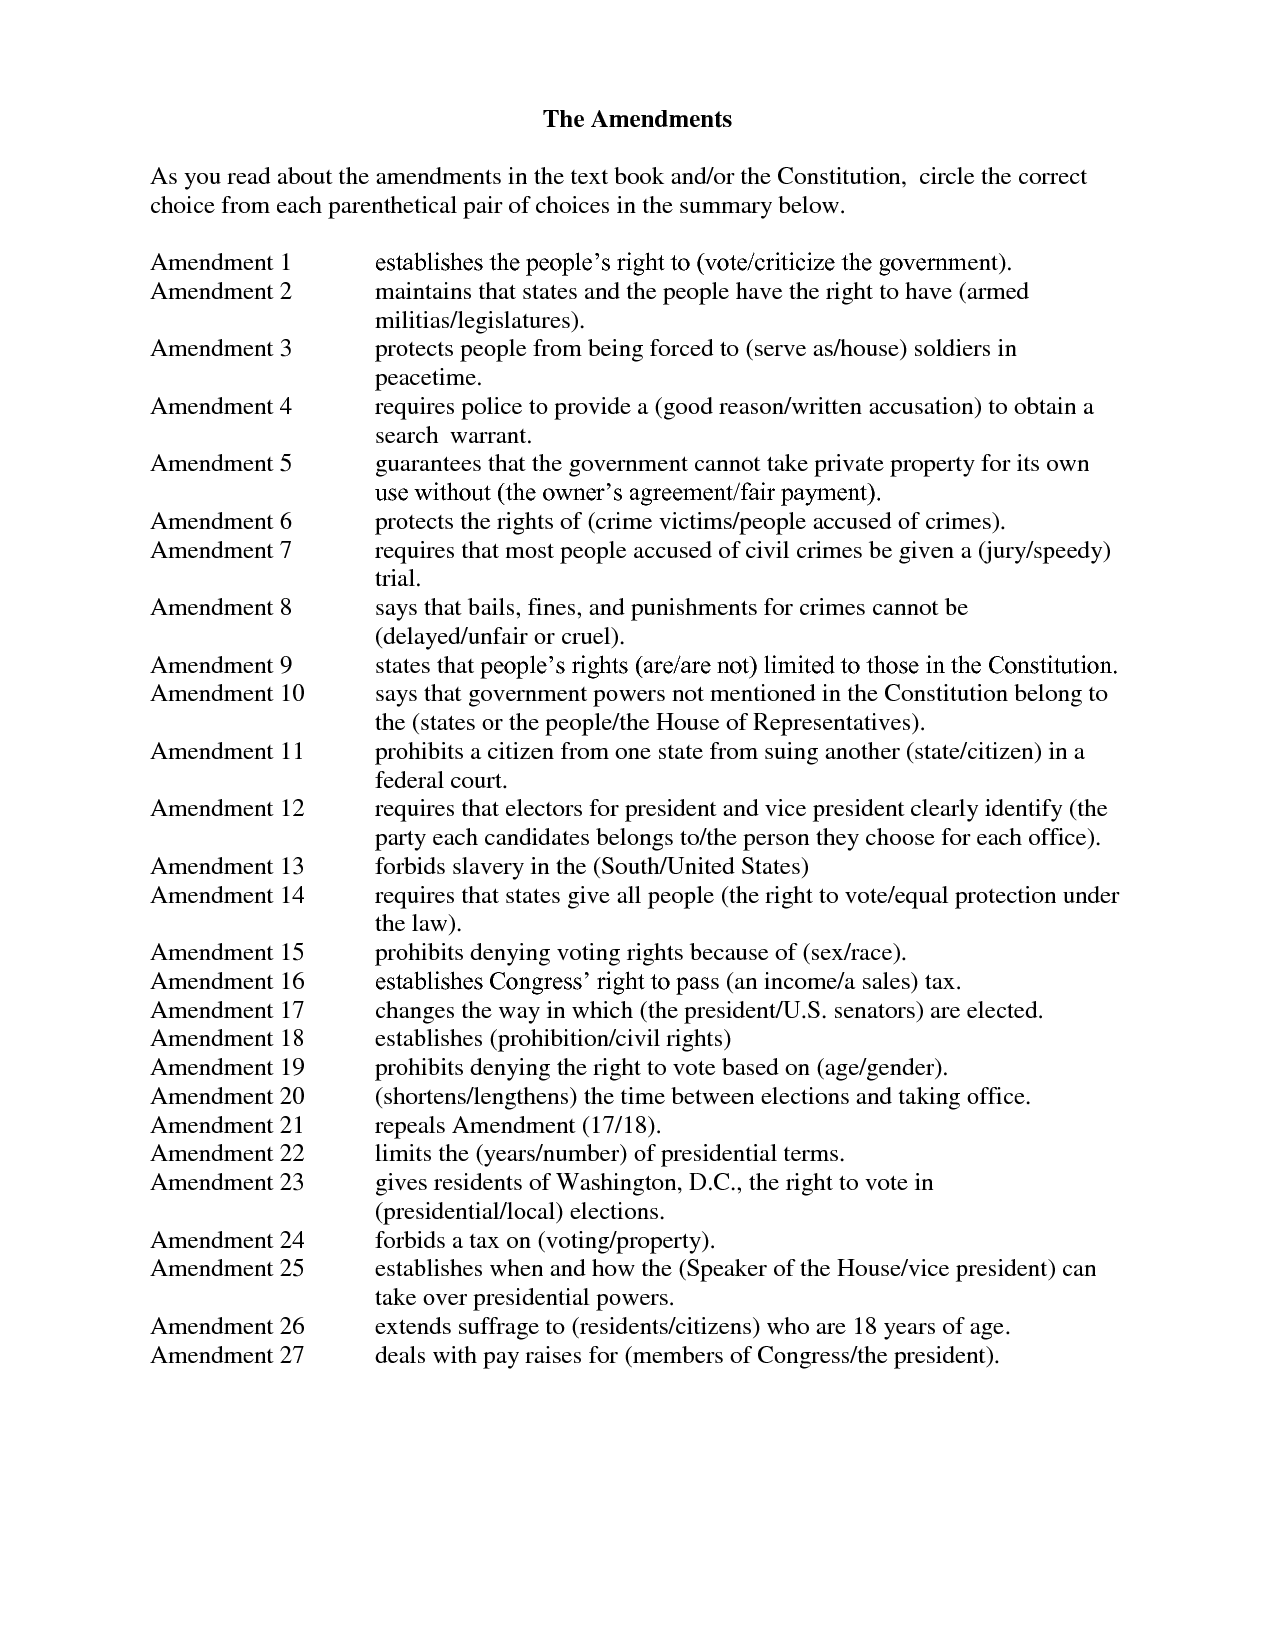 27 Amendments Worksheet Image